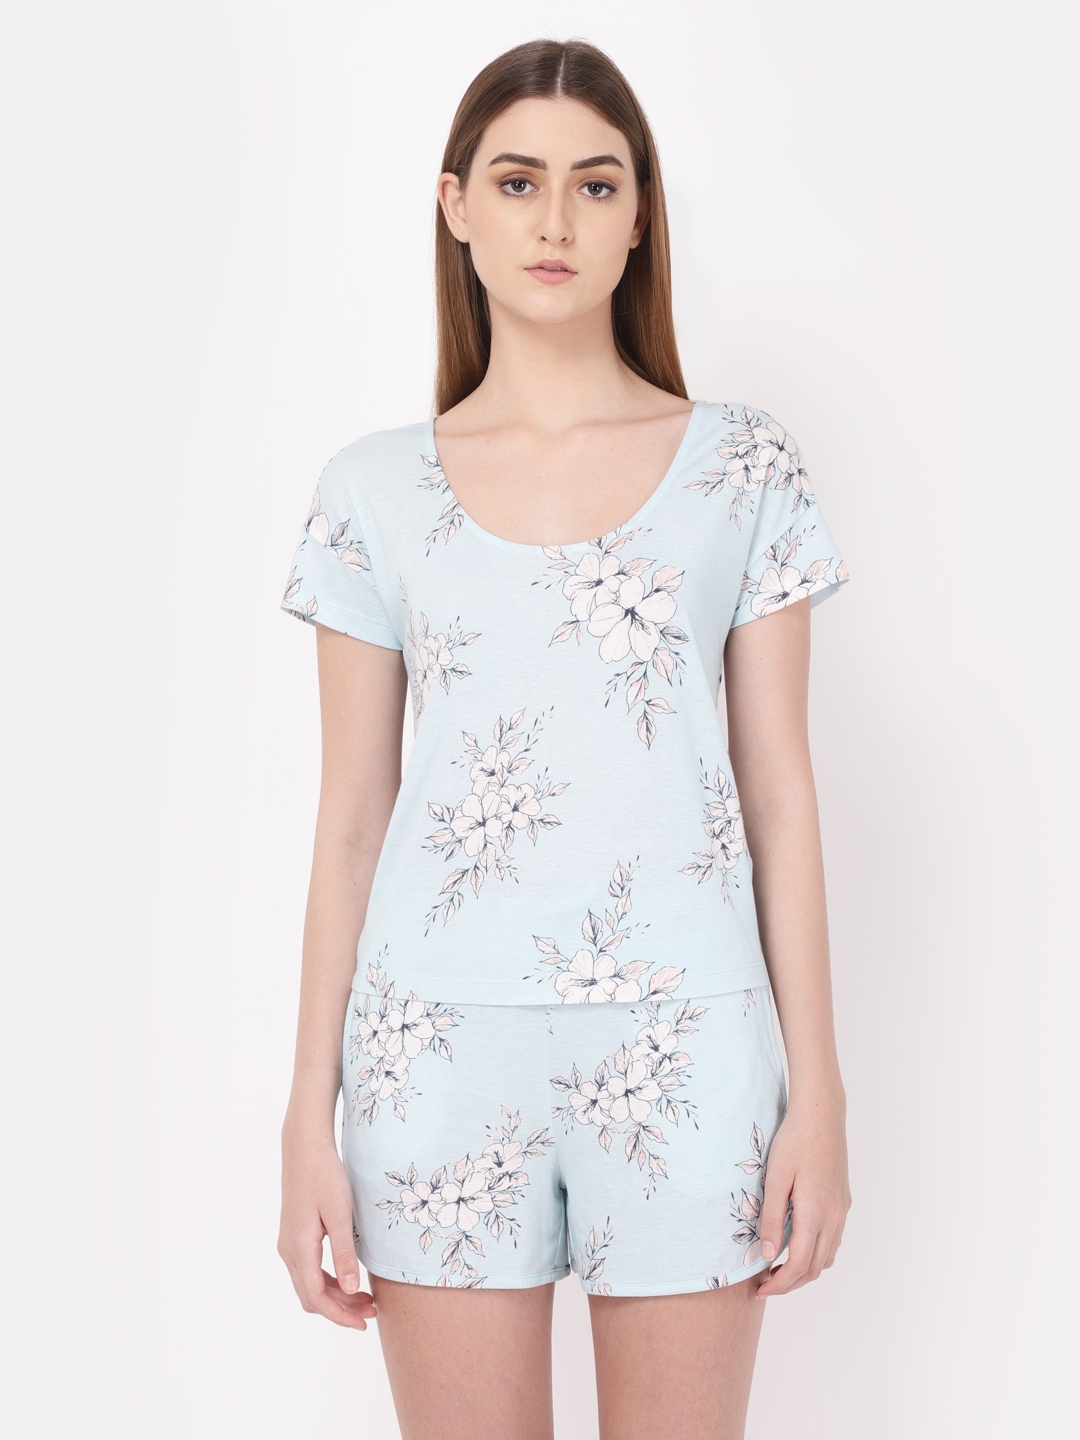 YOONOY | Blue Printed Nightwear Sets